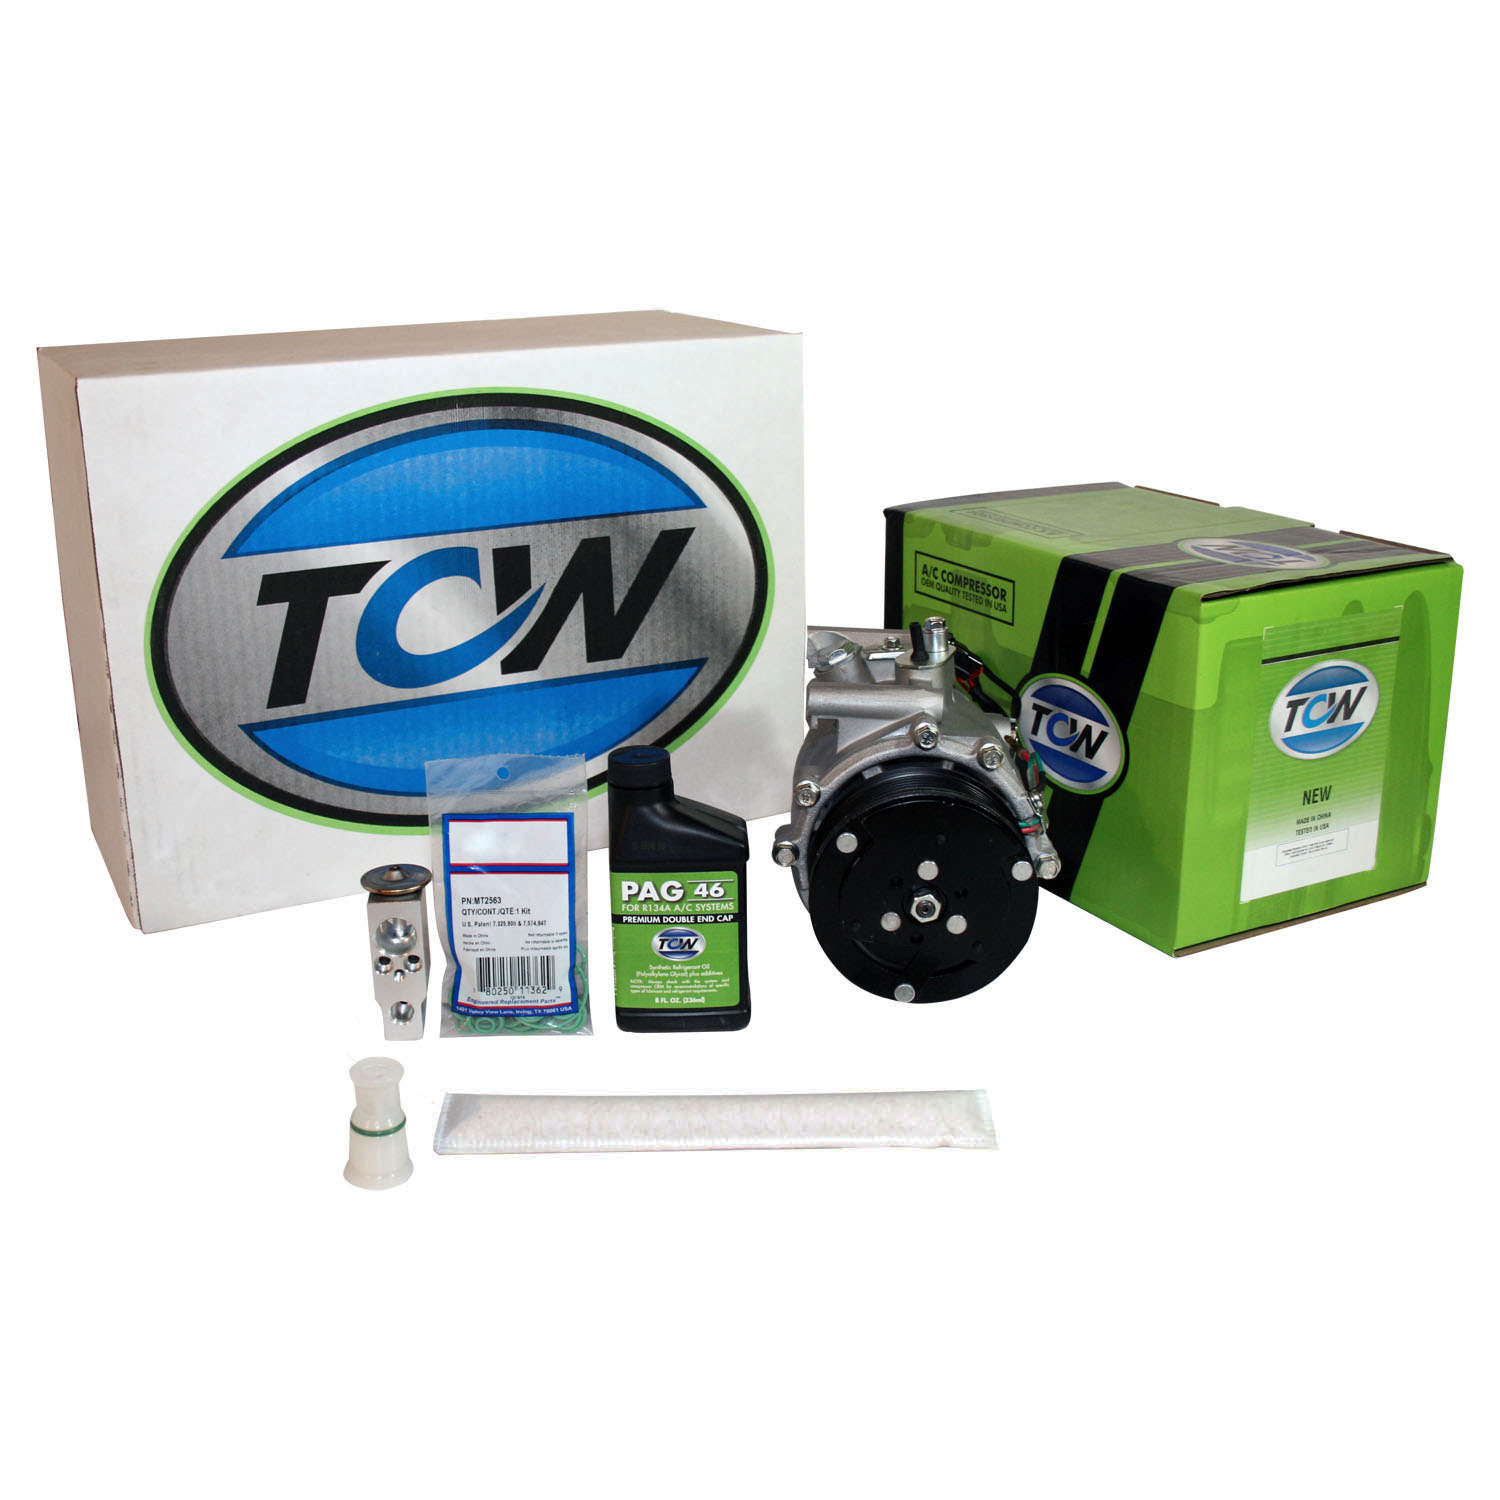 TCW Vehicle A/C Kit K1000484N New Product Image field_60b6a13a6e67c